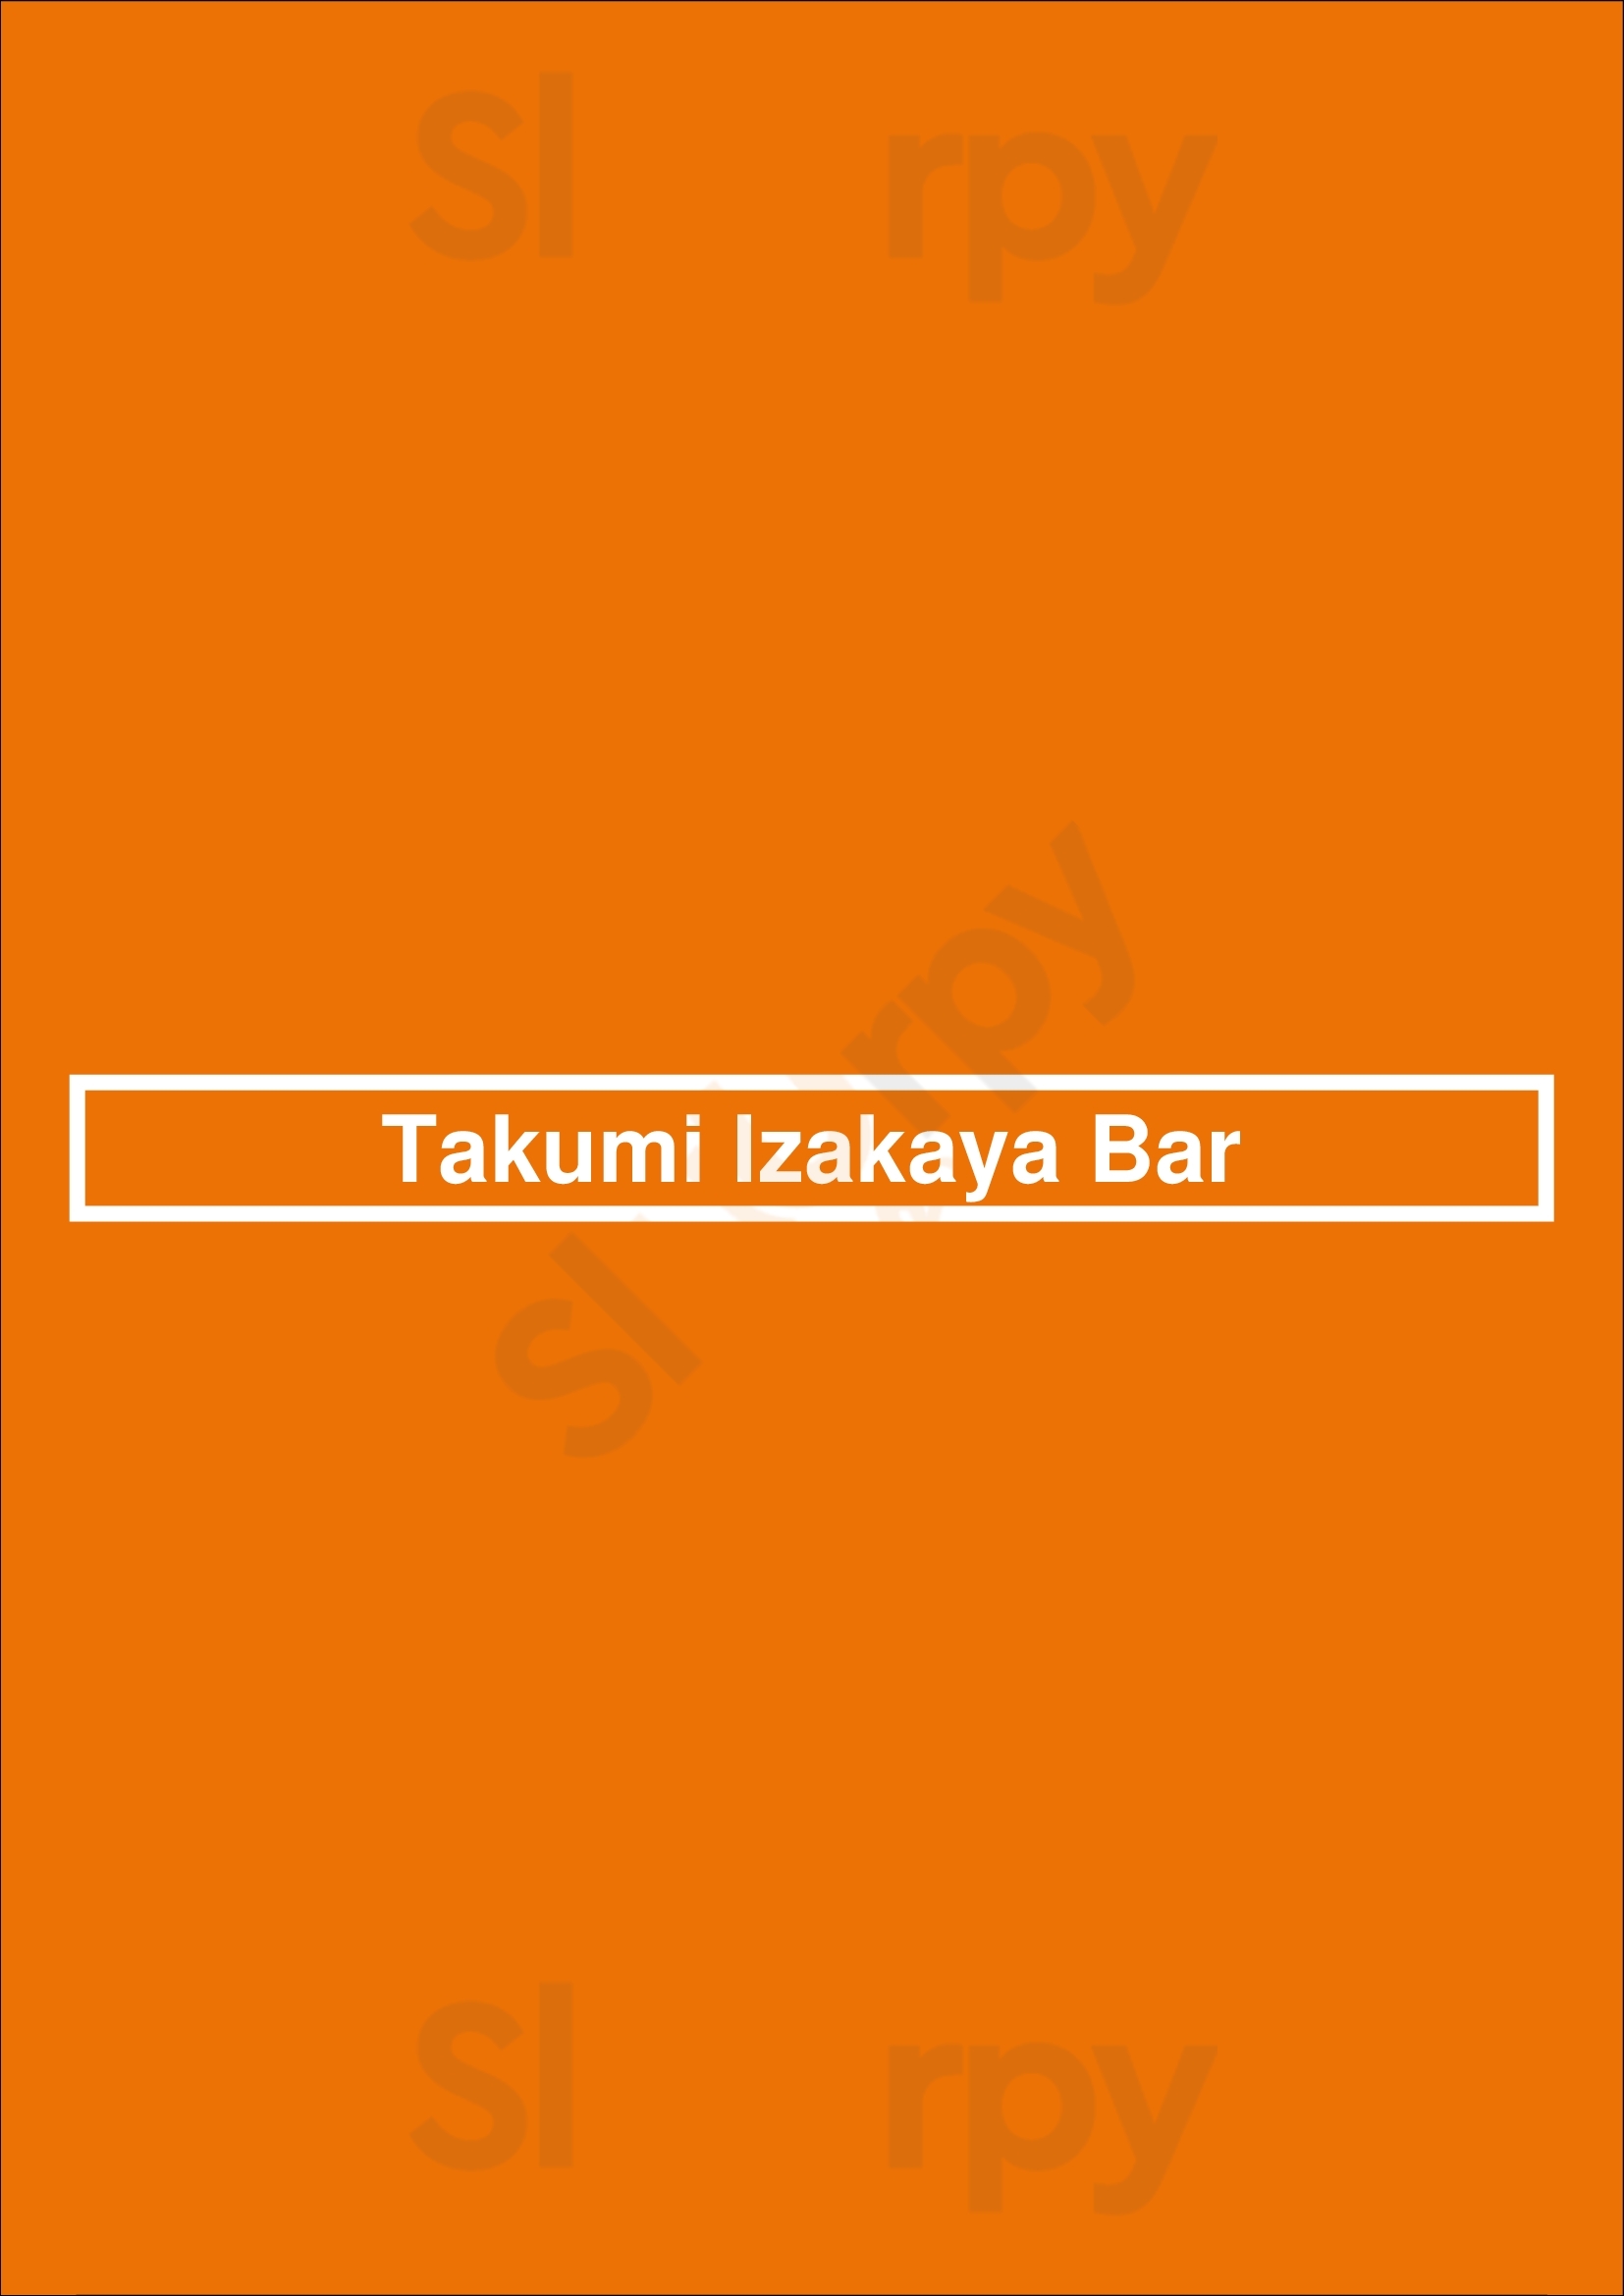 Takumi Izakaya Bar Sacramento Menu - 1